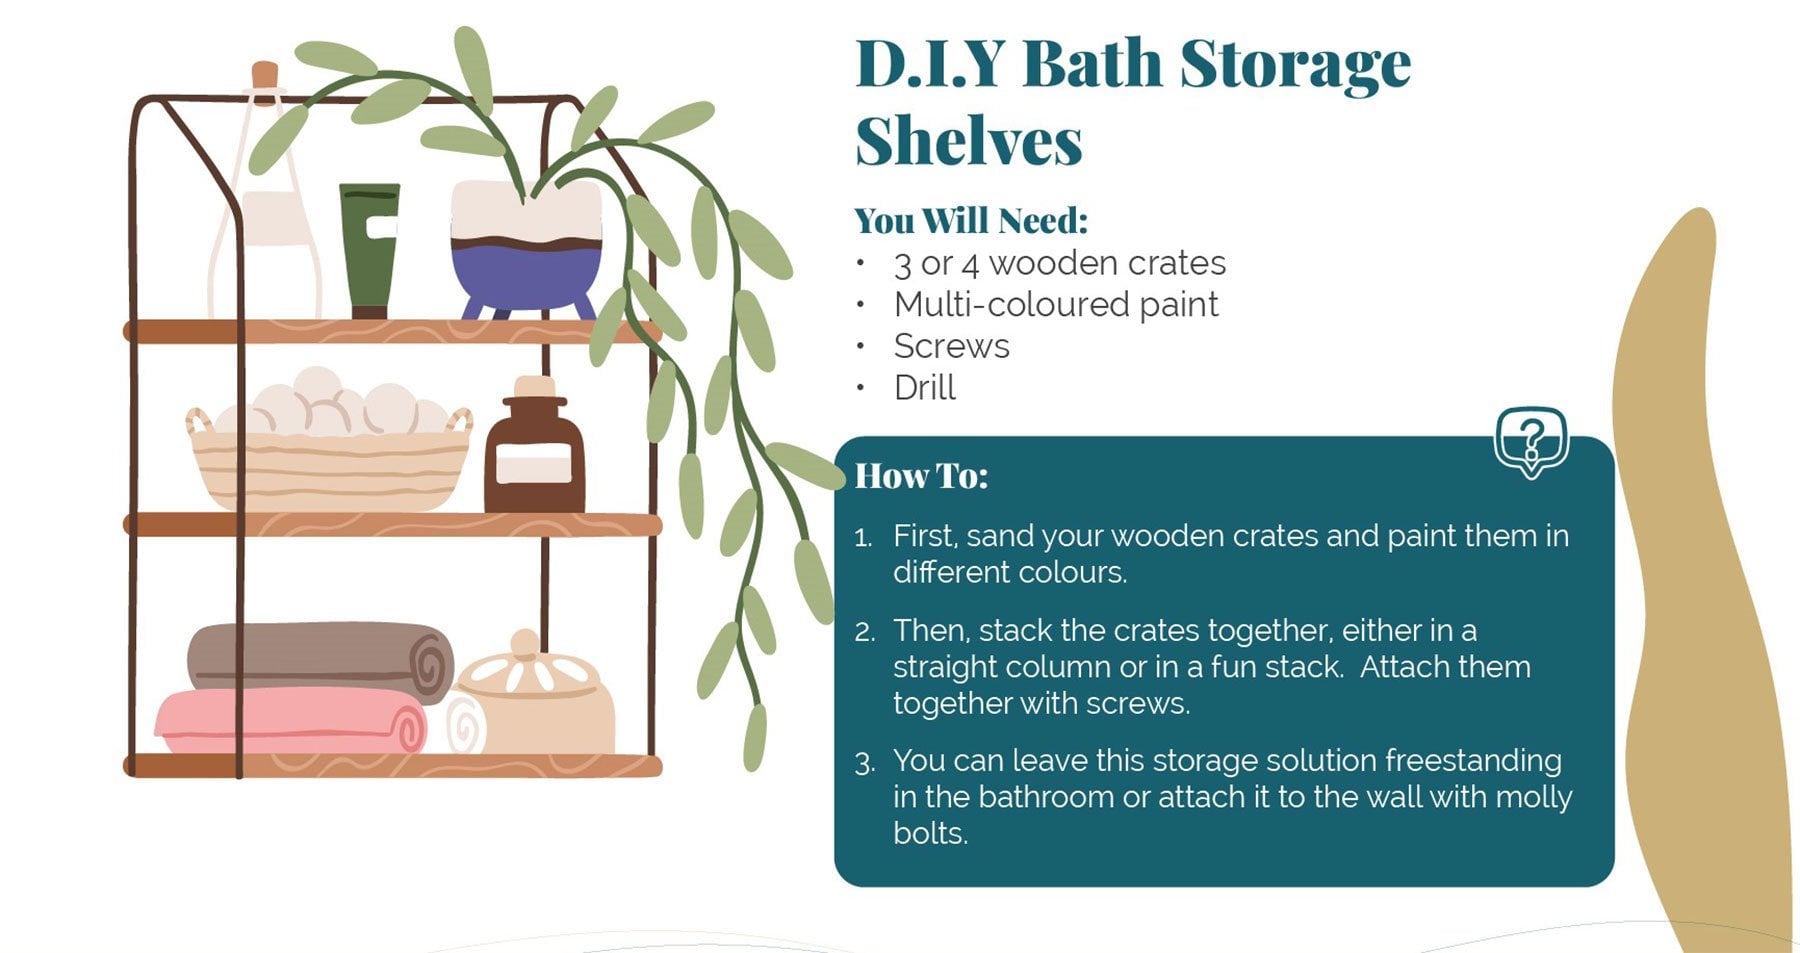 D.I.Y Bath Storage Shelves